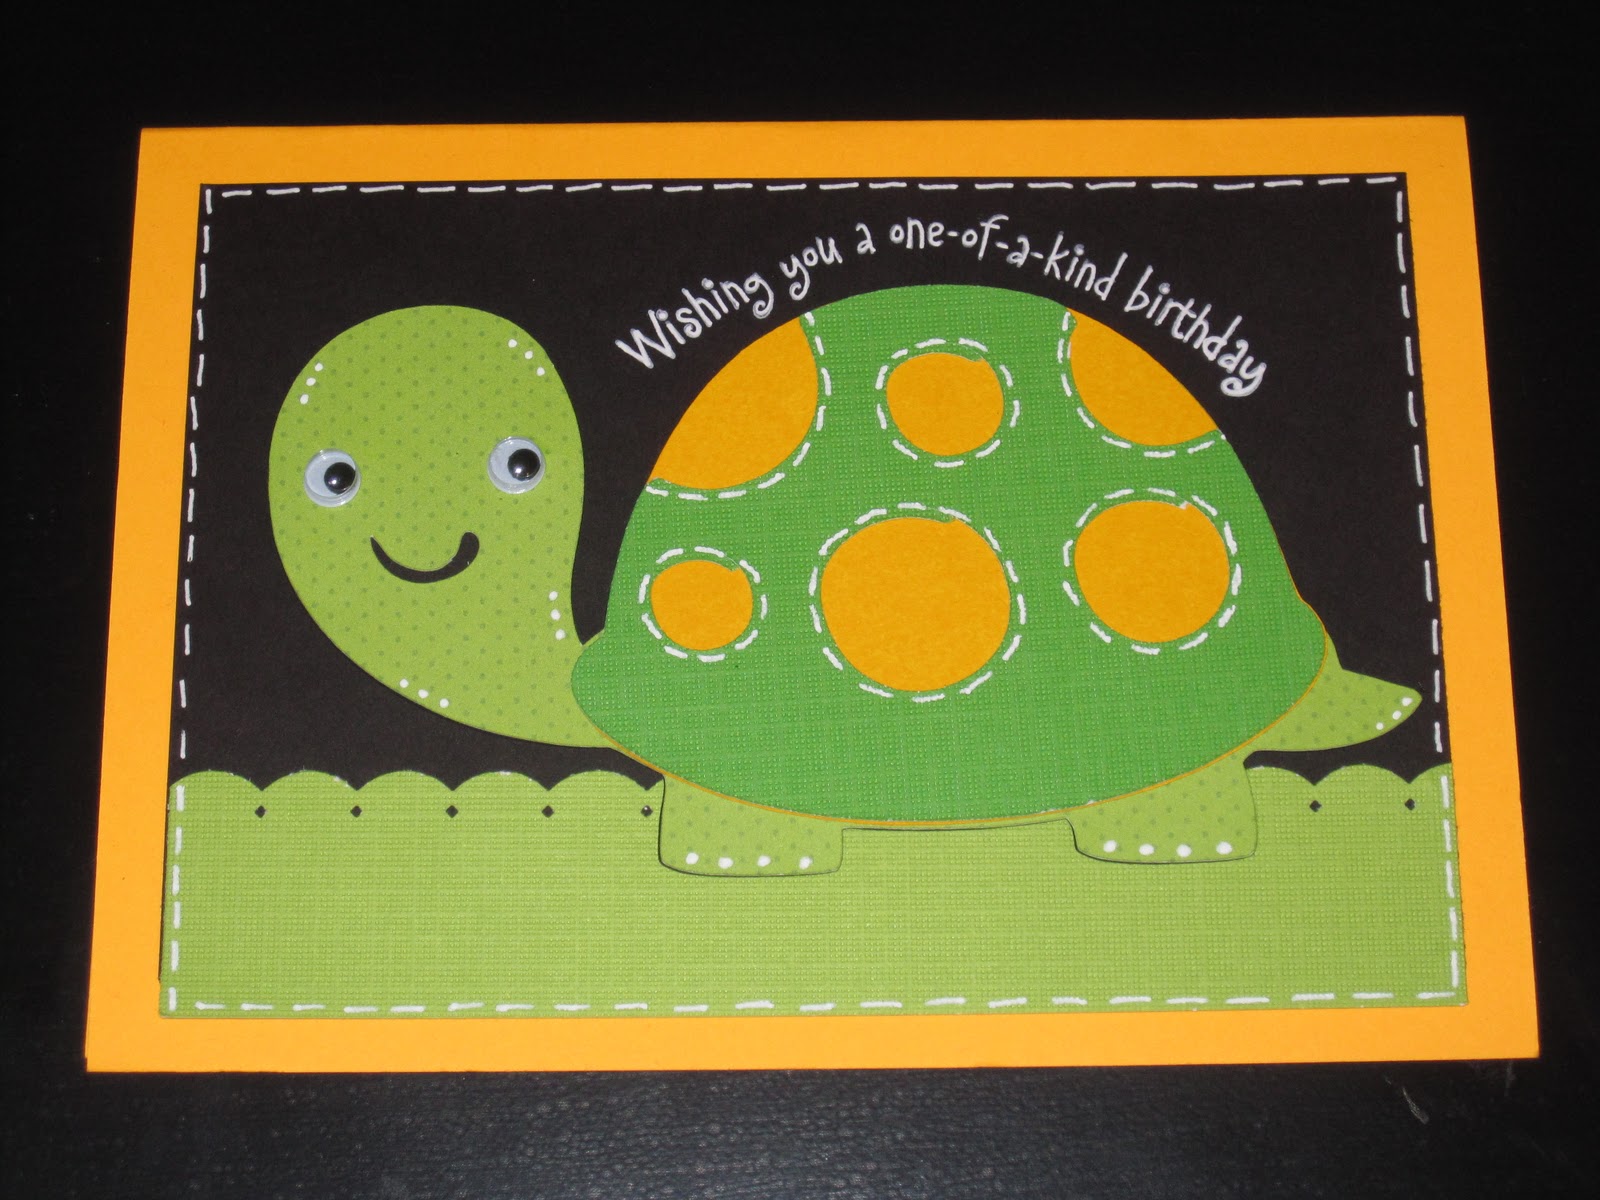 turtle-happy-birthday-card-by-lola-design-ltd-notonthehighstreet